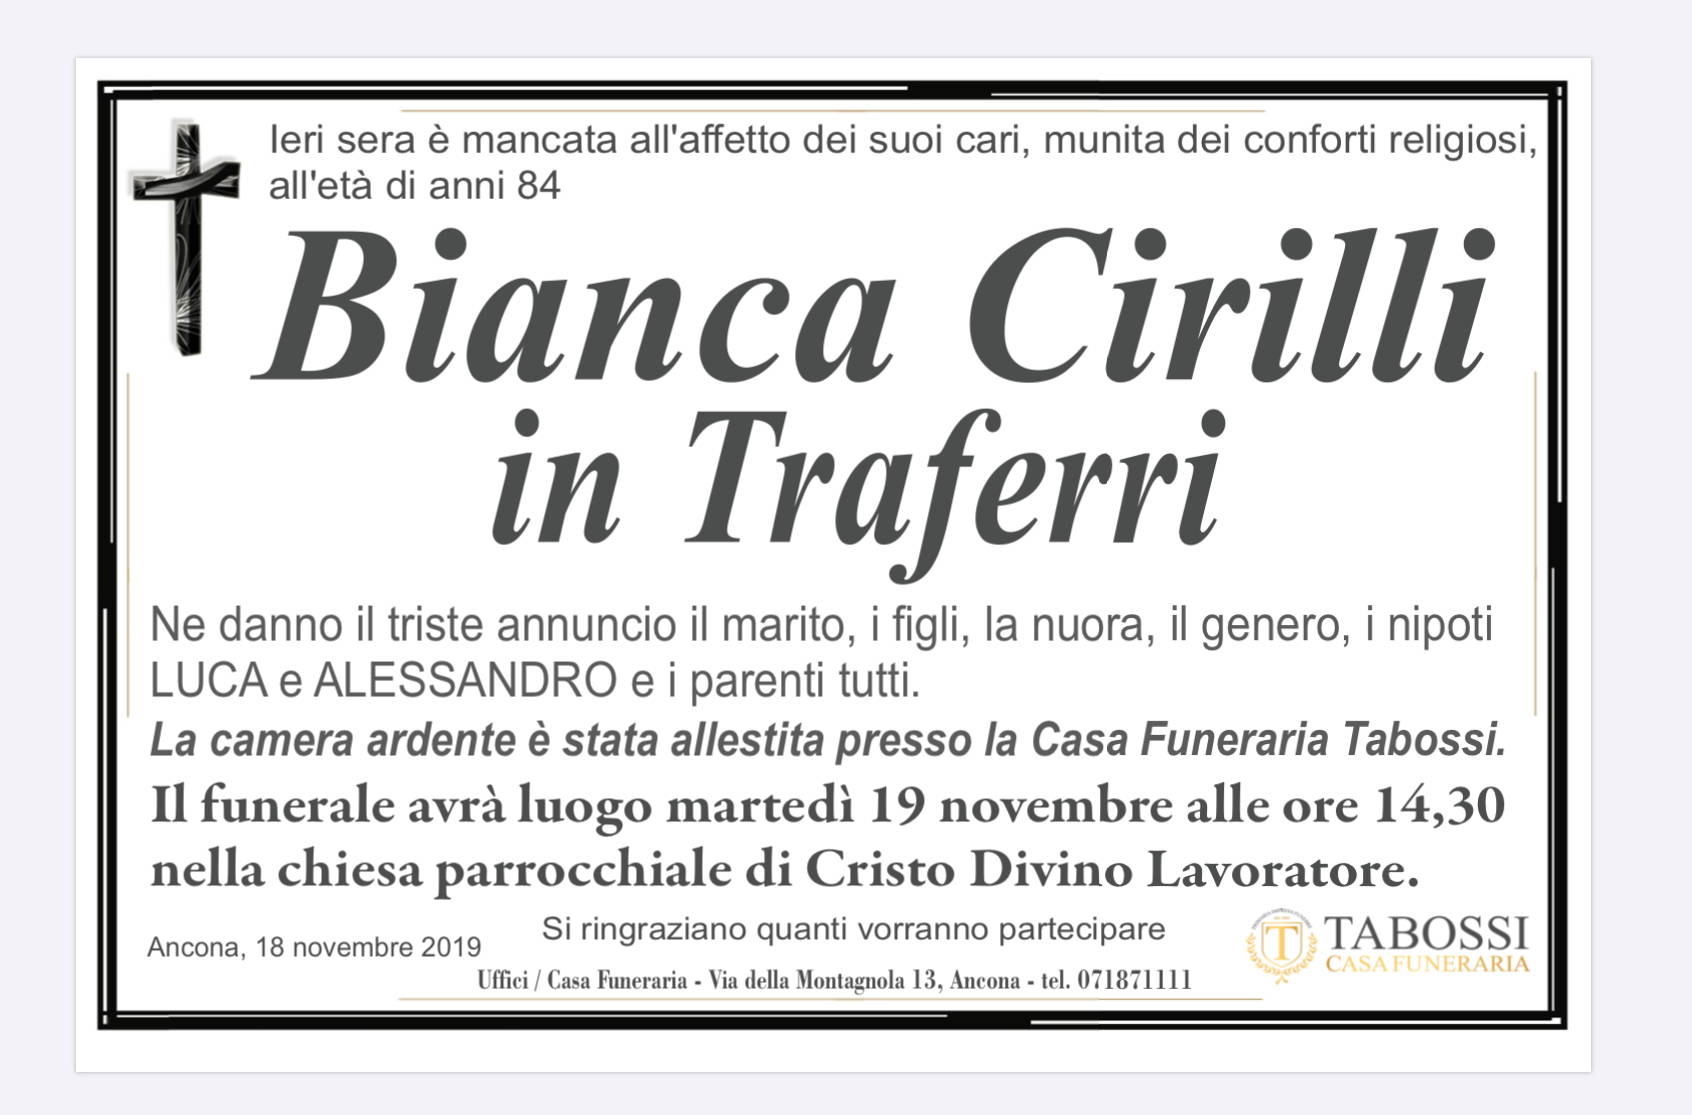 Bianca Cirilli